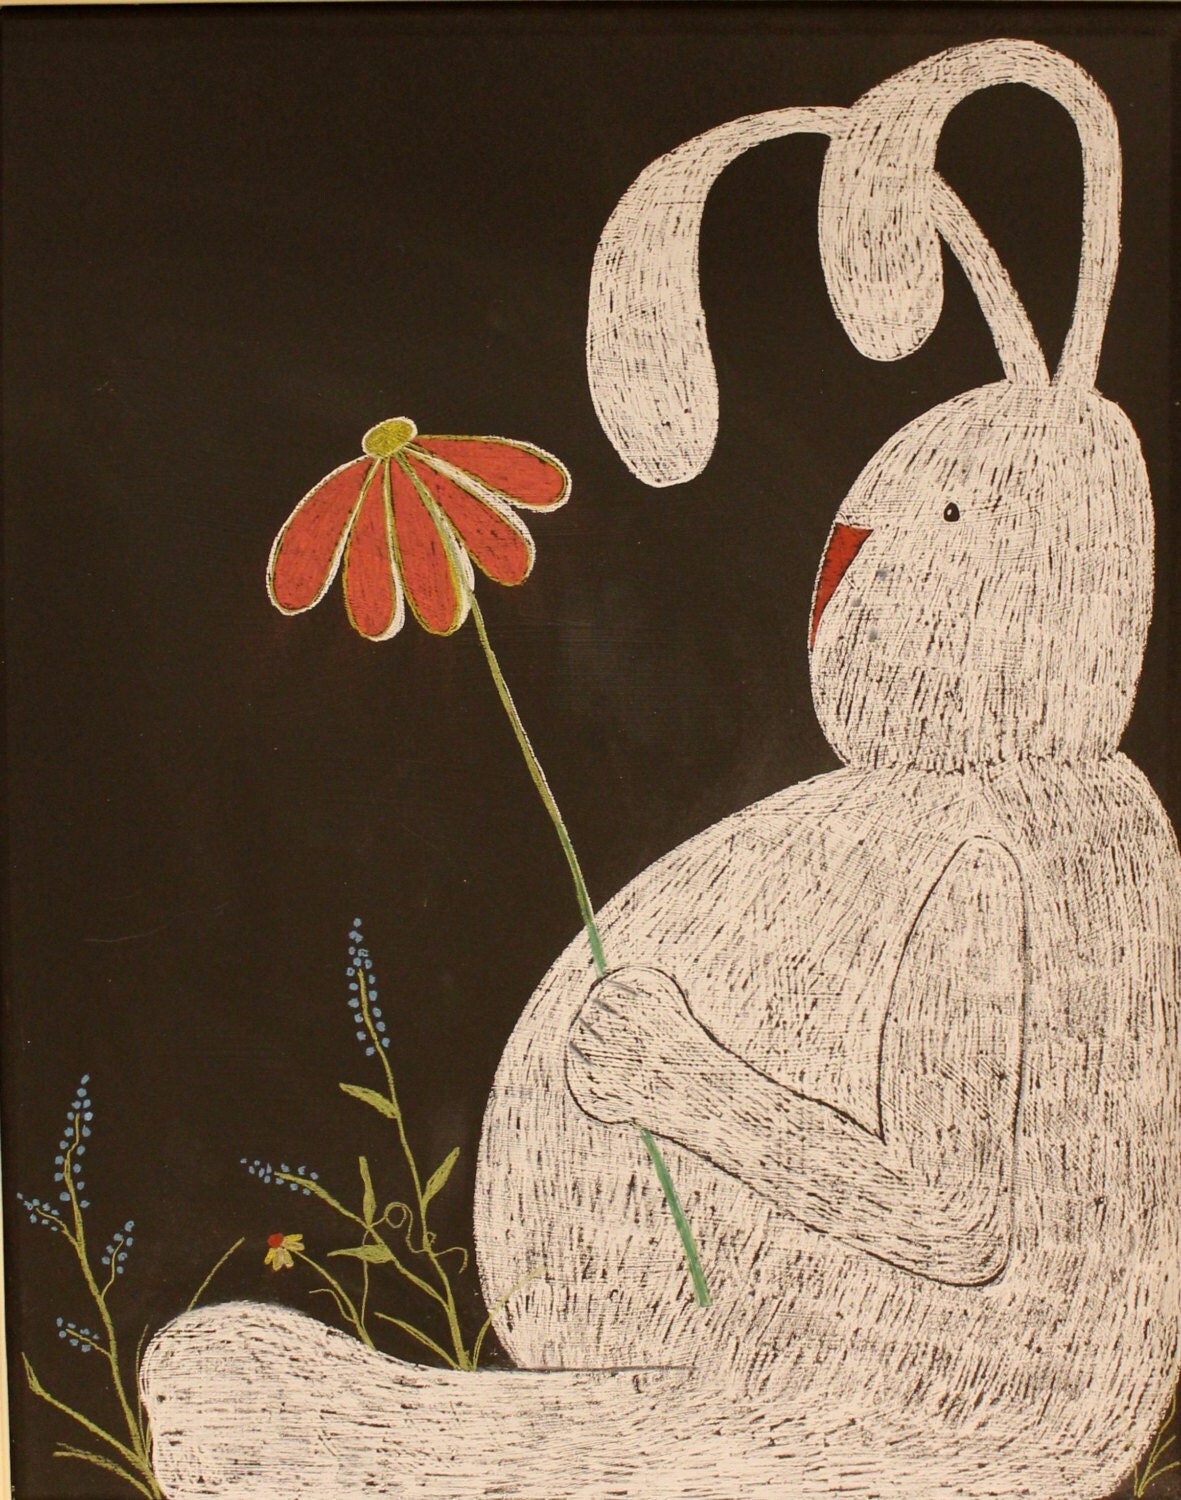 Chalk Rabbit Drawing by RusticHousePrims on Etsy